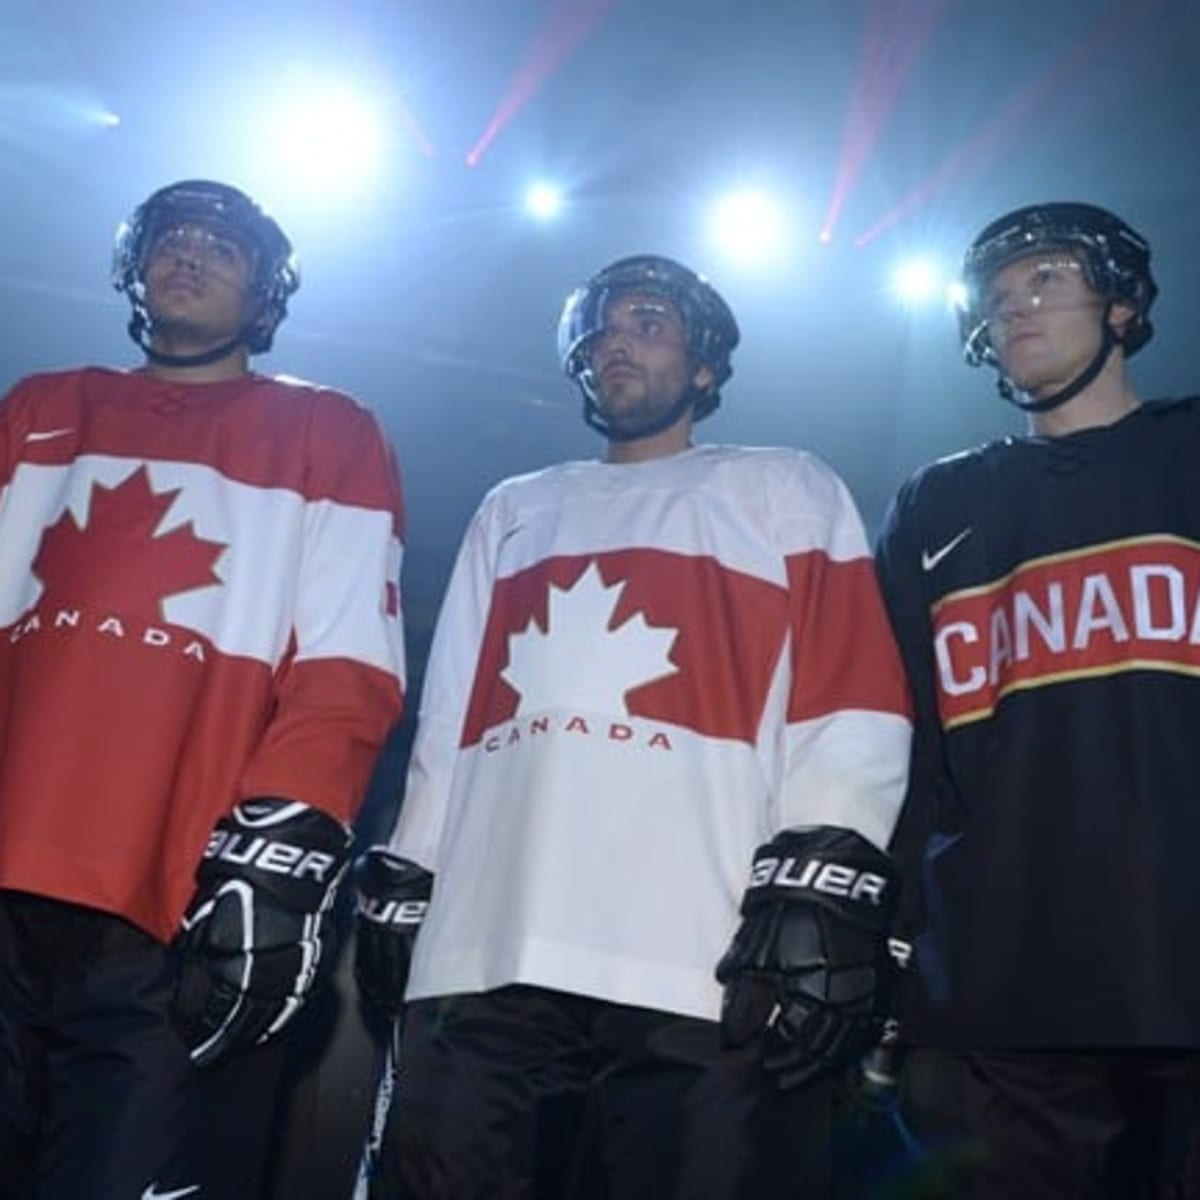 New Team Canada Olympic hockey jerseys unveiled (PHOTOS)